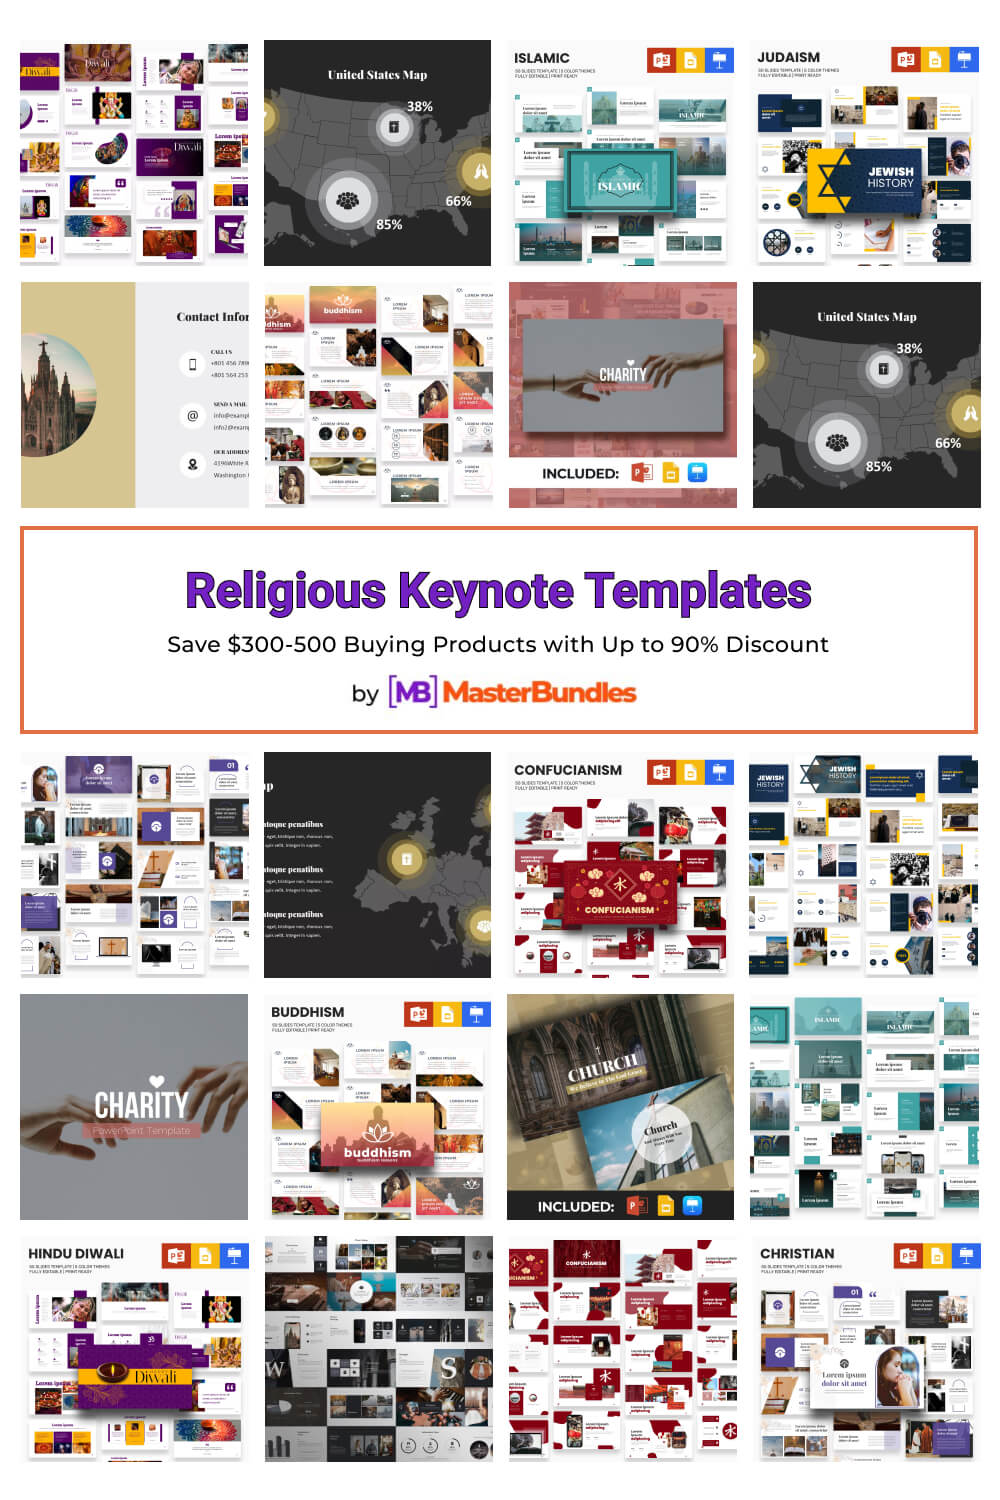 religious keynote templates pinterest image.